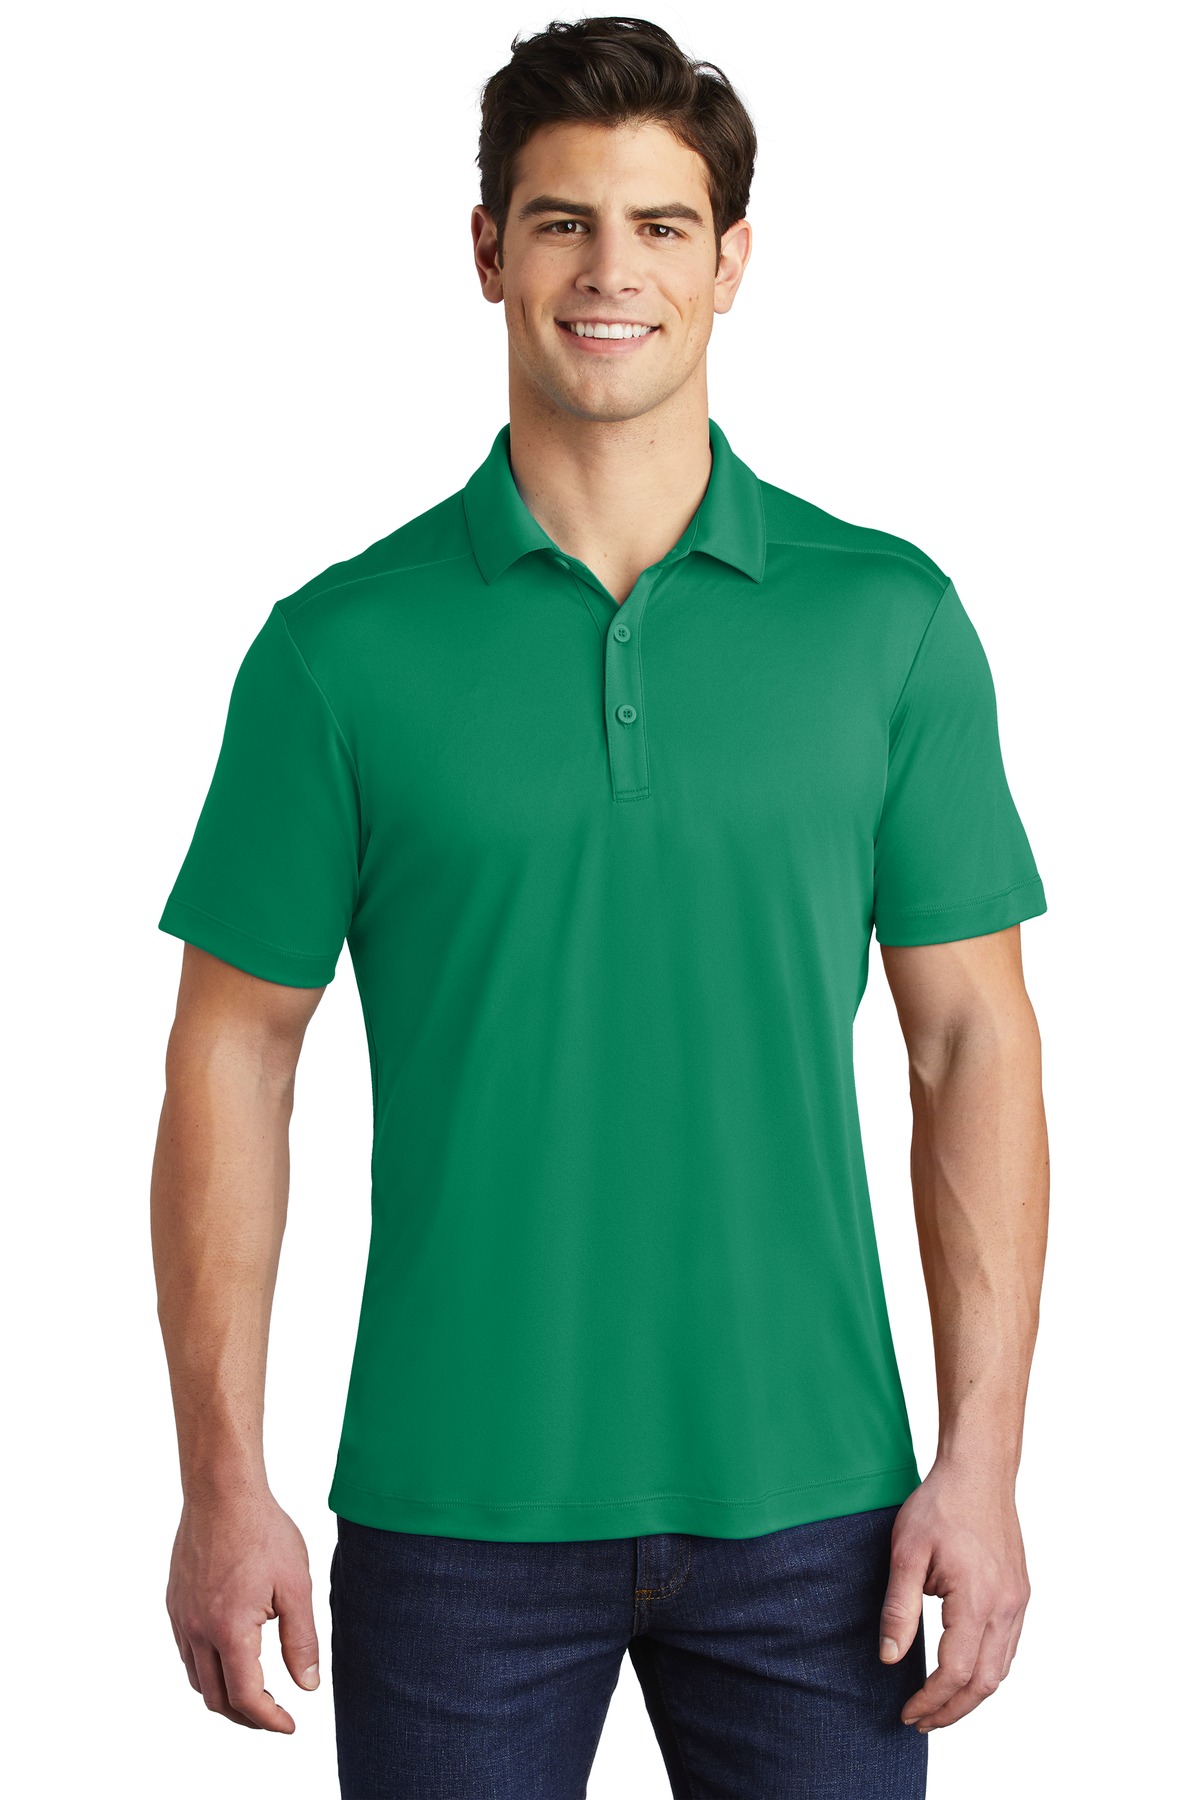  JUST COOL Mens Plain Sports Polo Shirt (M) (Kelly